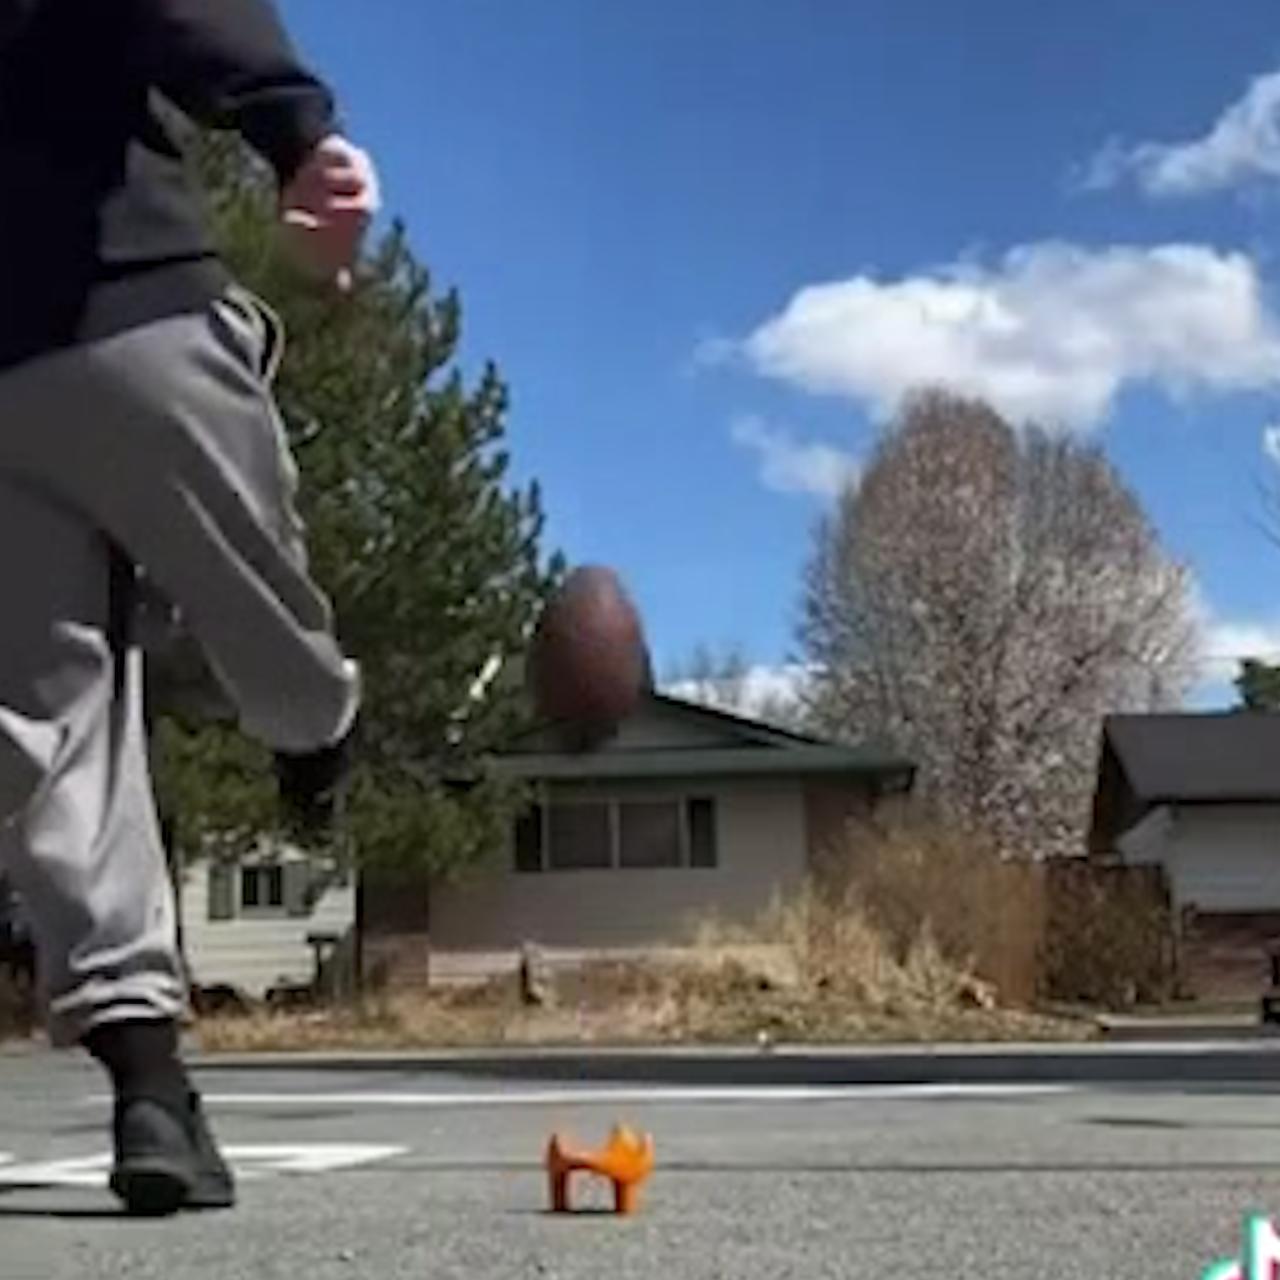 Man kicks a football into a moving car multiple times